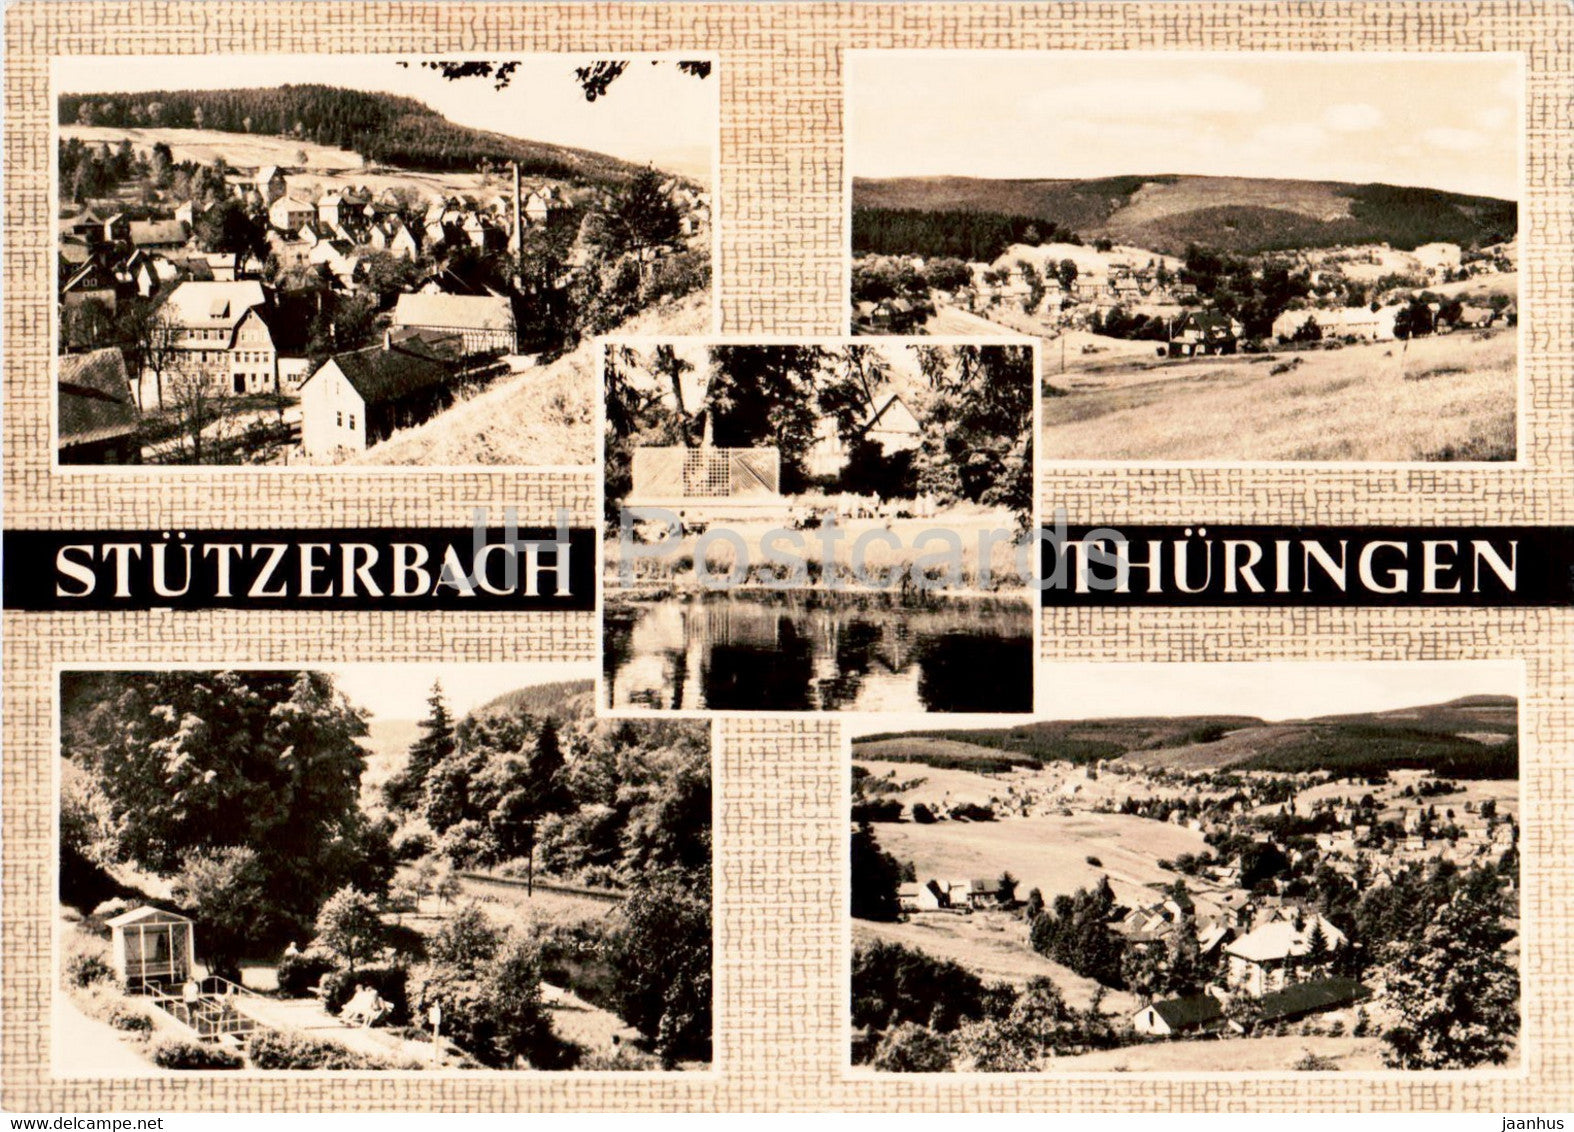 Stutzerbach - Thuringen - old postcard - Germany DDR - unused - JH Postcards